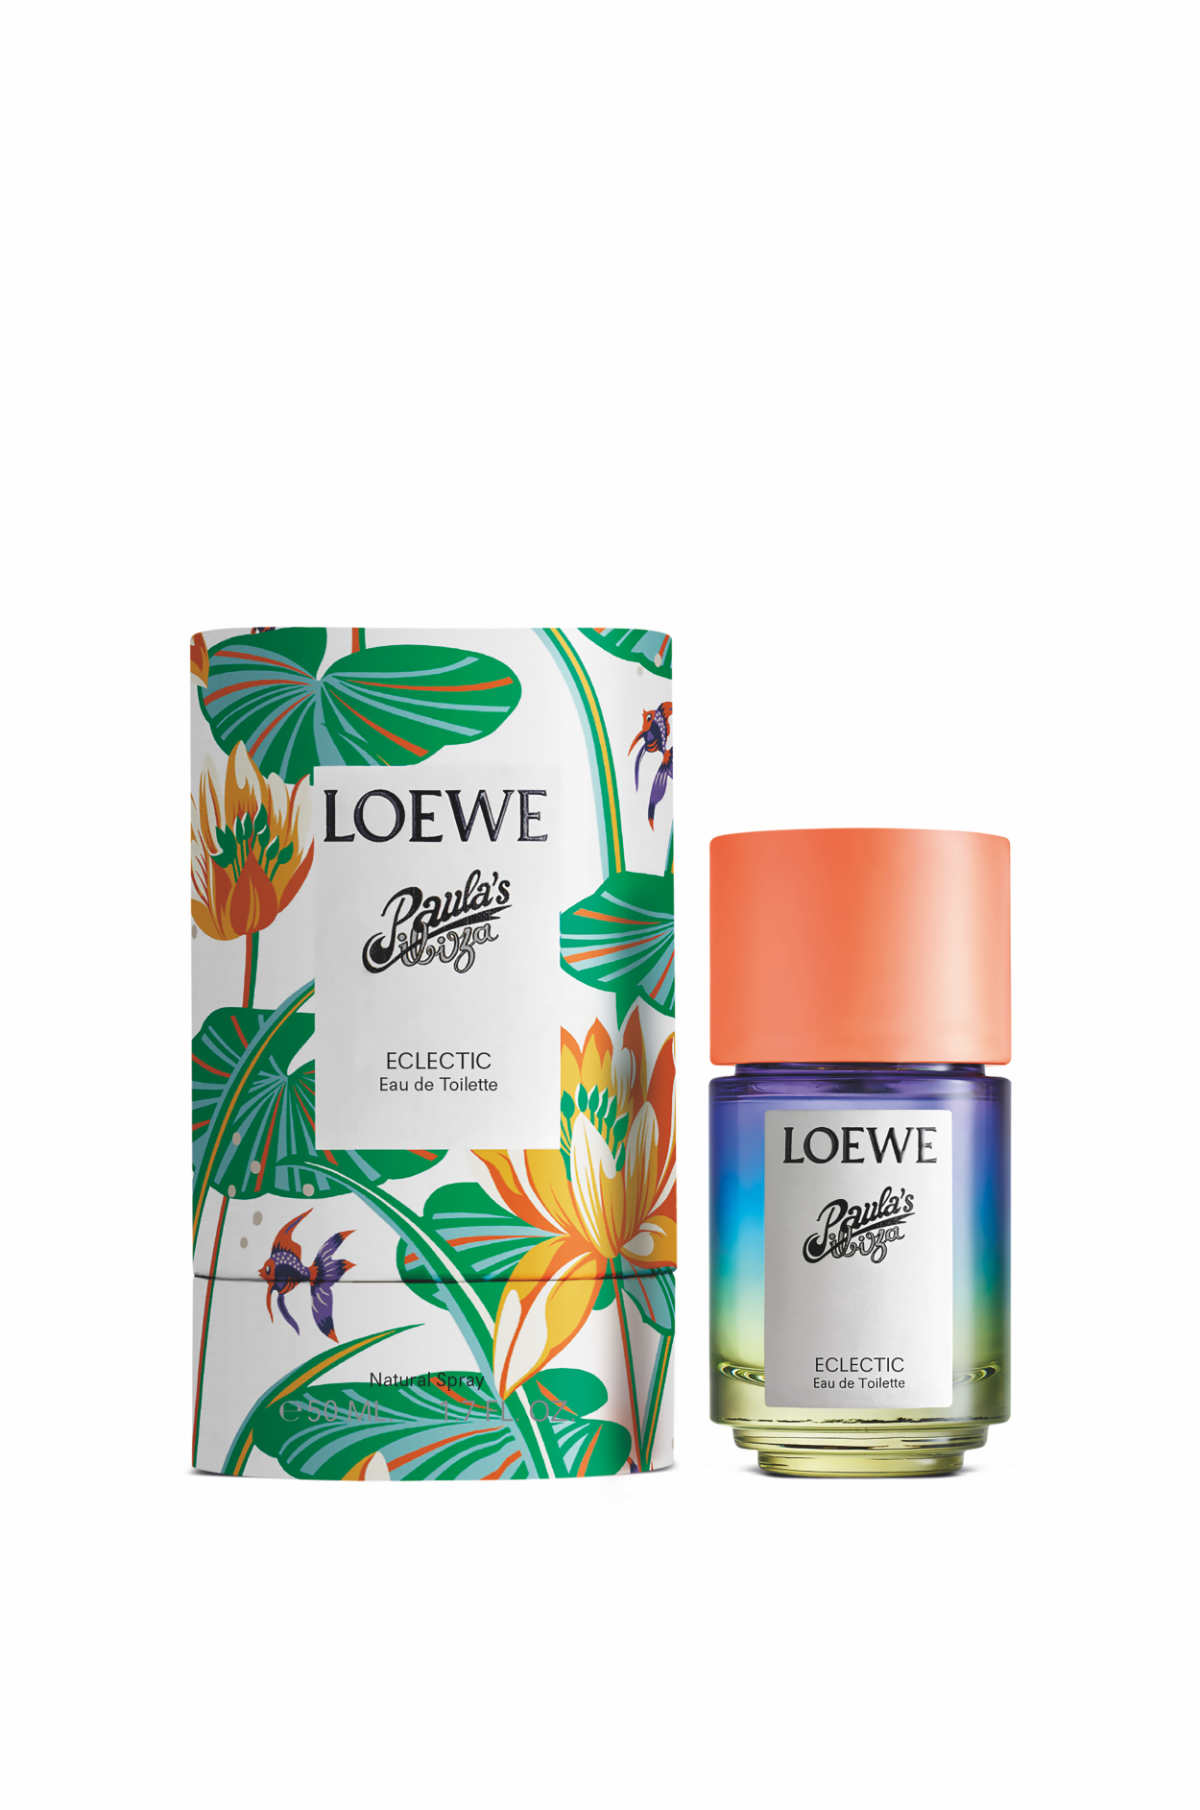 The New Loewe Paula’s Ibiza 2023 Perfumes Collection